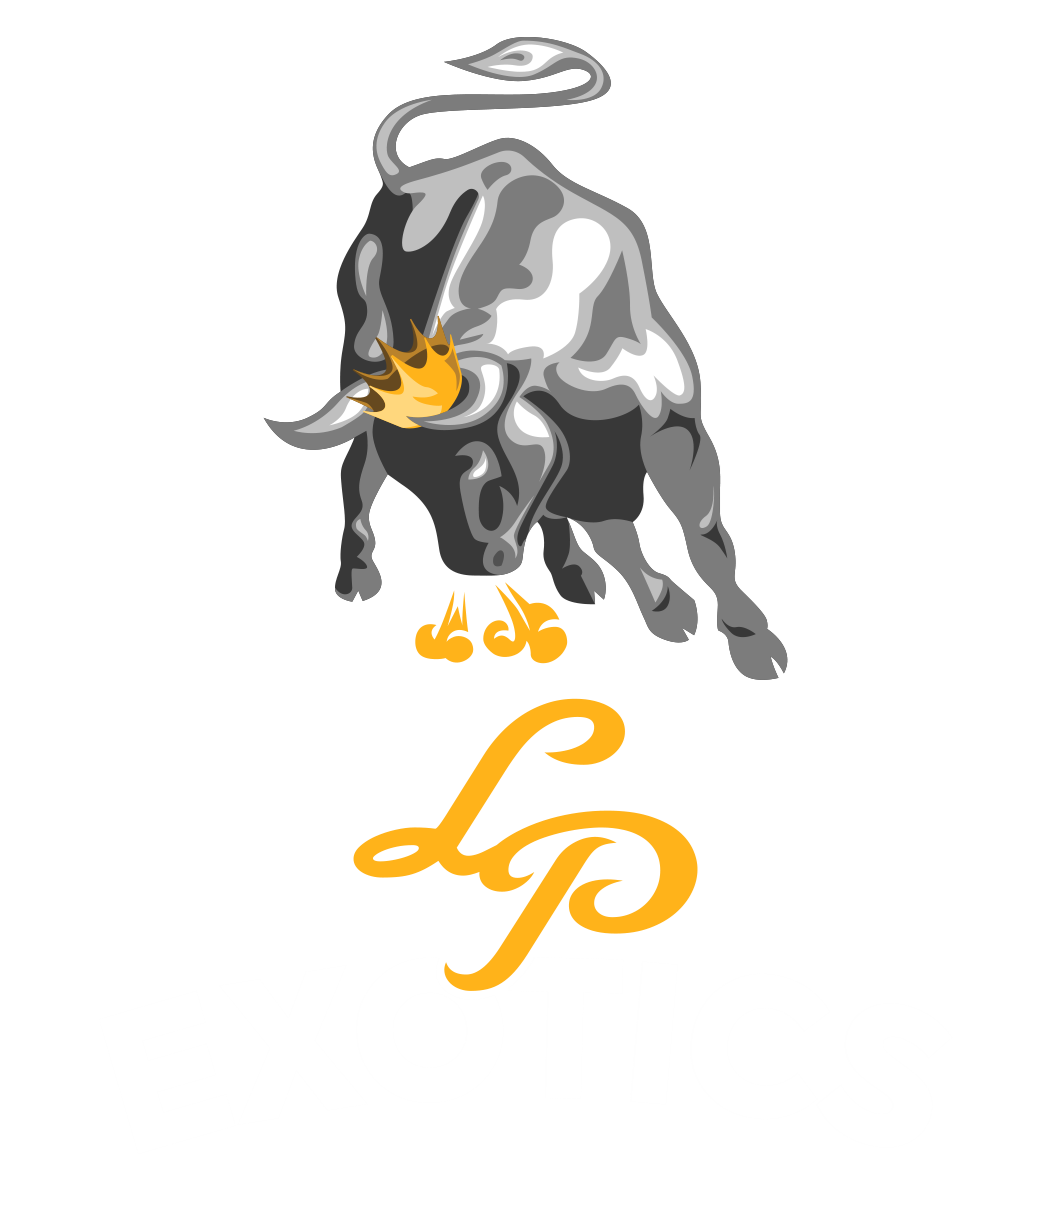 LP Exotics Cannabis Brand Logo